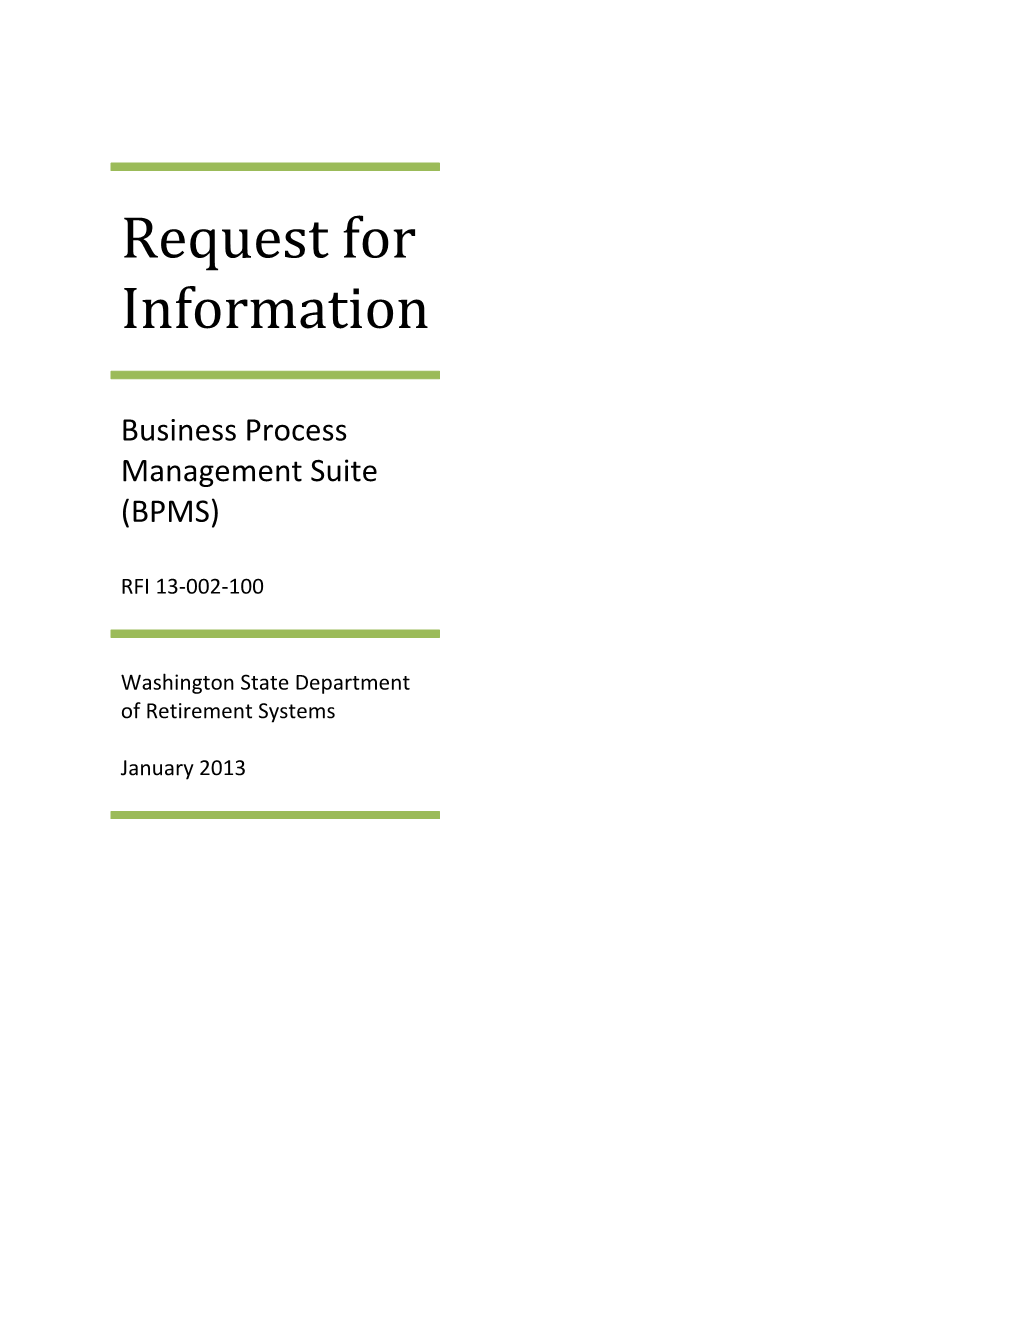 Request For Information 13-002-100 Business Process Management Suite (BPMS)